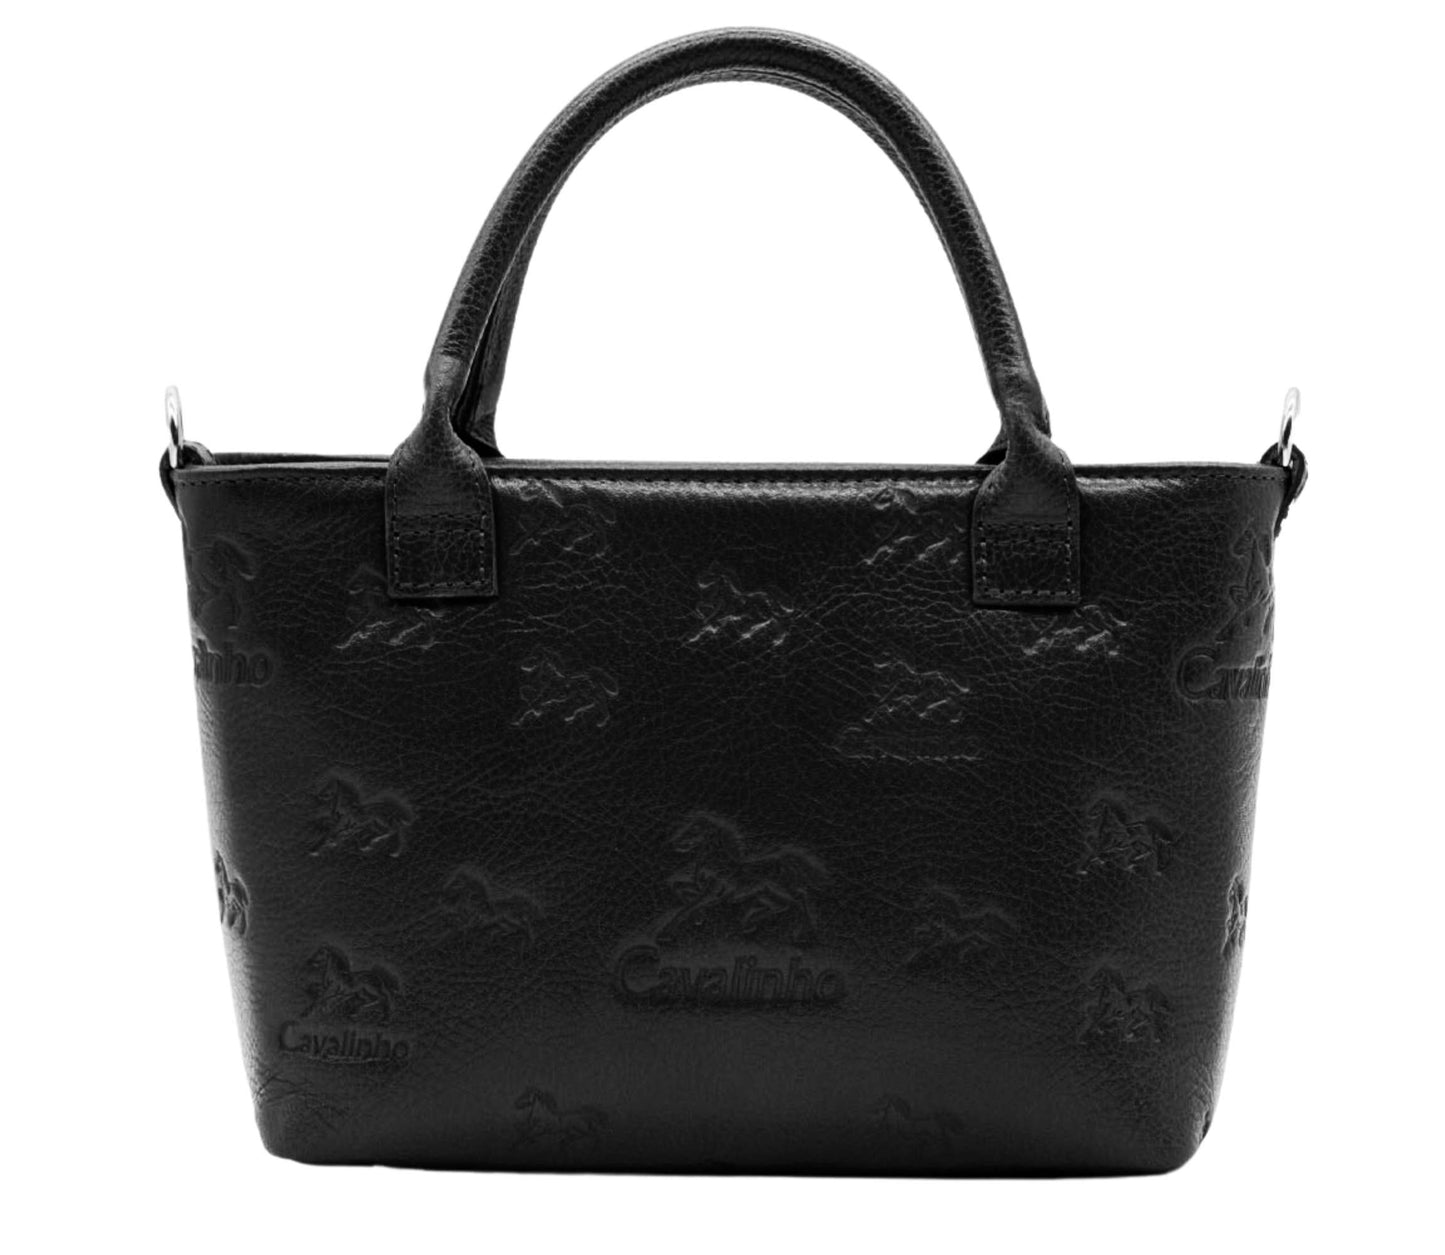 Cavalinho Cavalo Lusitano Mini Leather Handbag - Black - 18090243.01.99_3